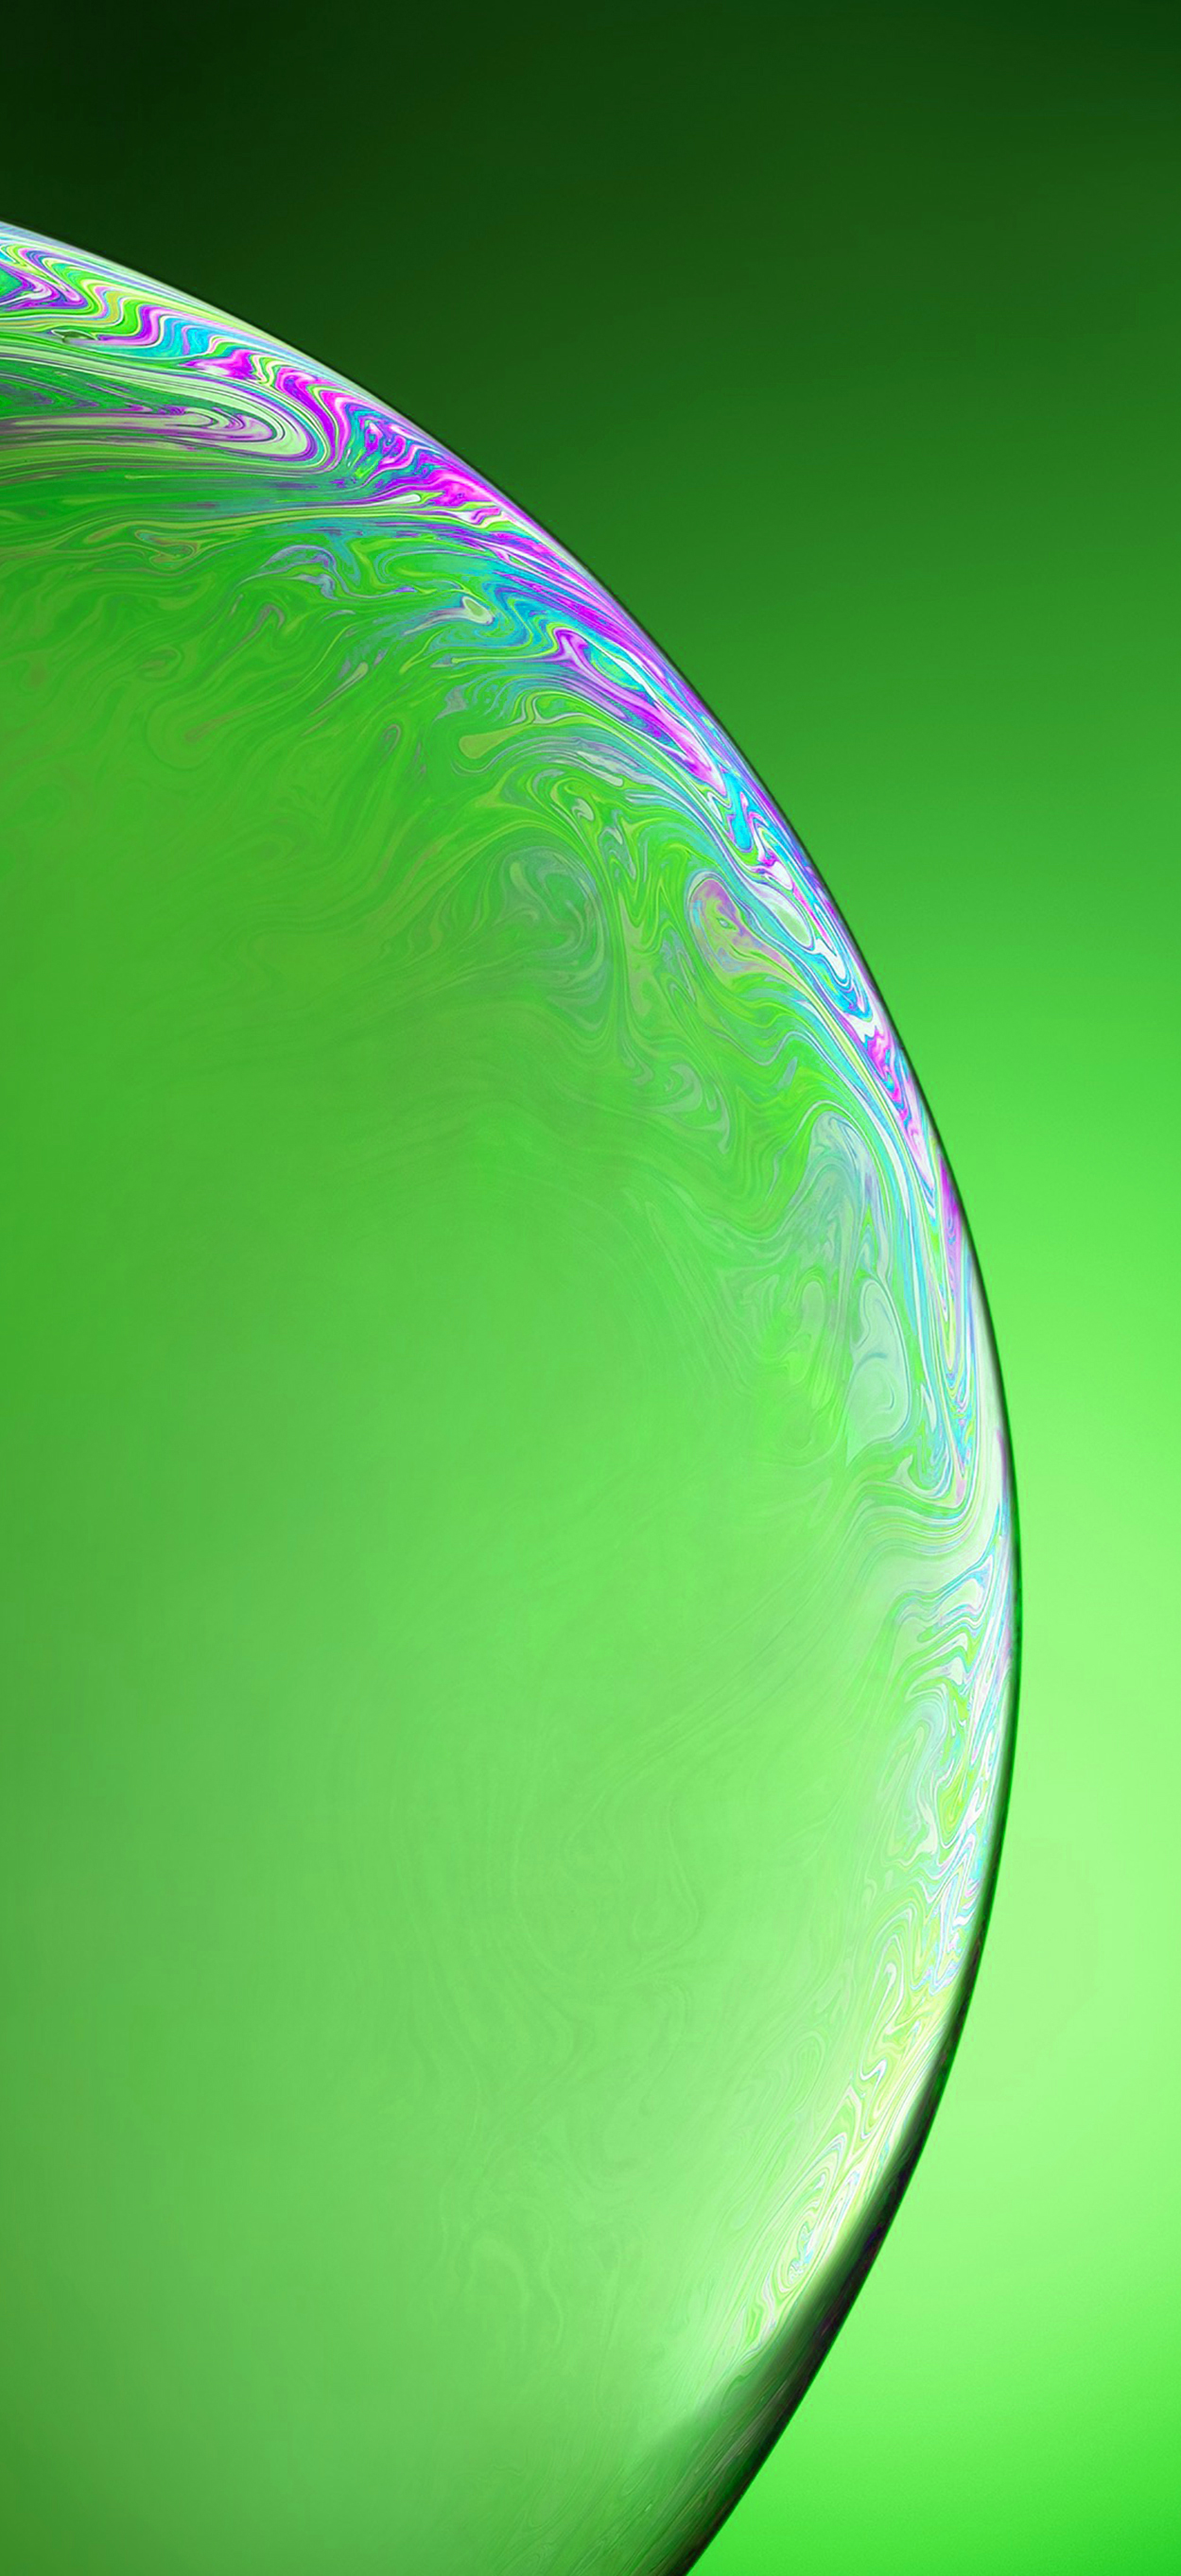 iPhone XR - Bonus 2 - The Missing Color (Green